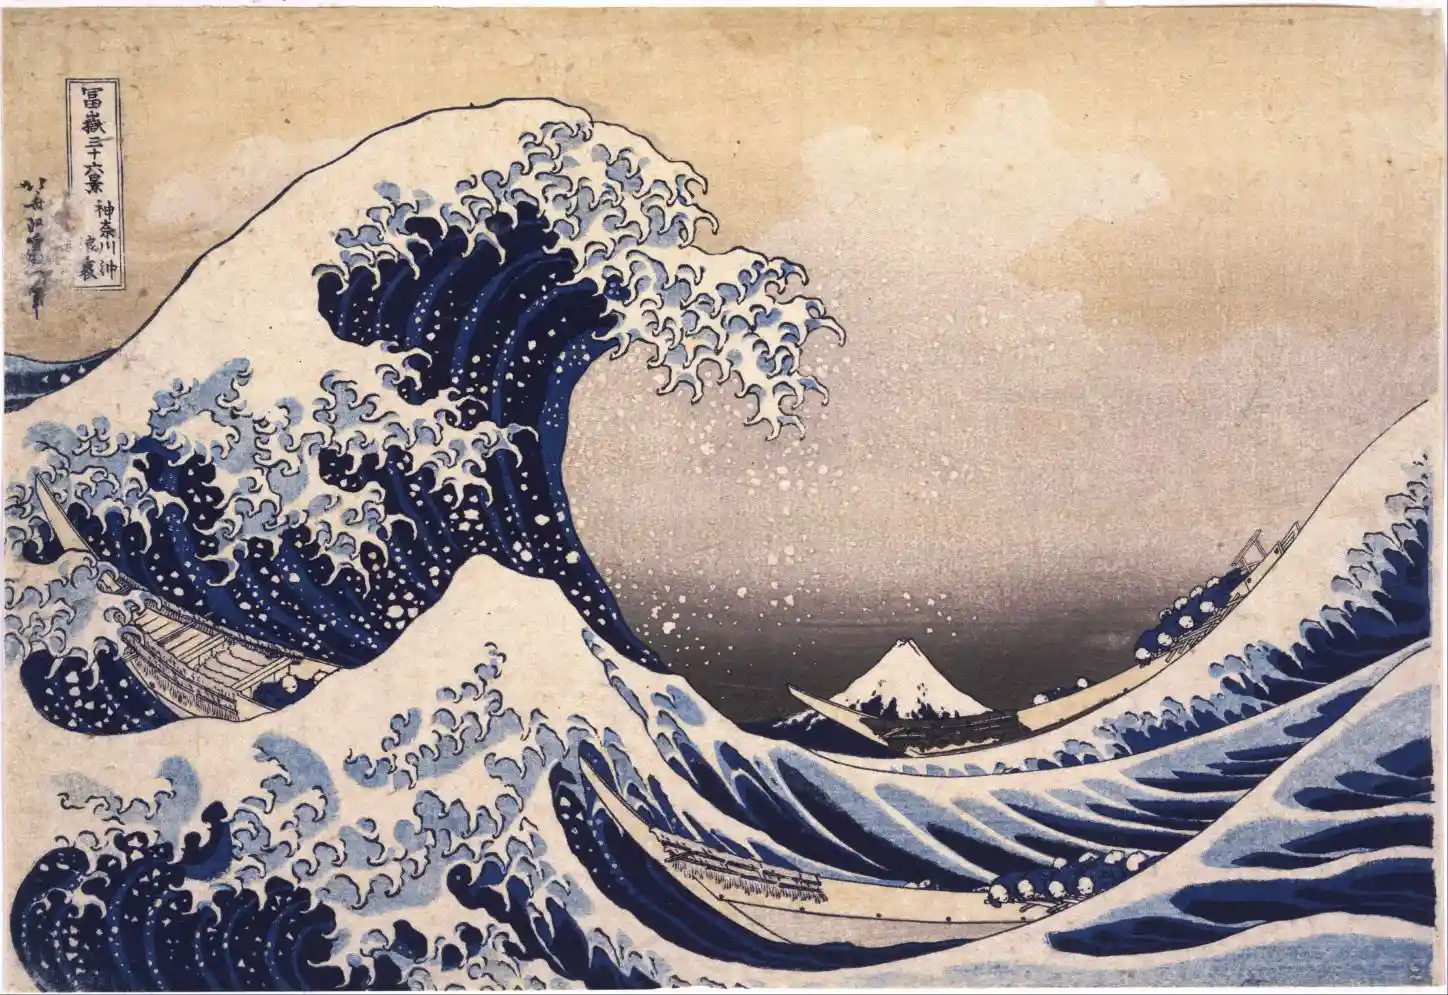 Katsushika_Hokusai_-_Thirty-Six_Views_of_Mount_Fuji-_The_Great_Wave_Off_the_Coast_of_Kanagawa_-_Google_Art_Project.jpg